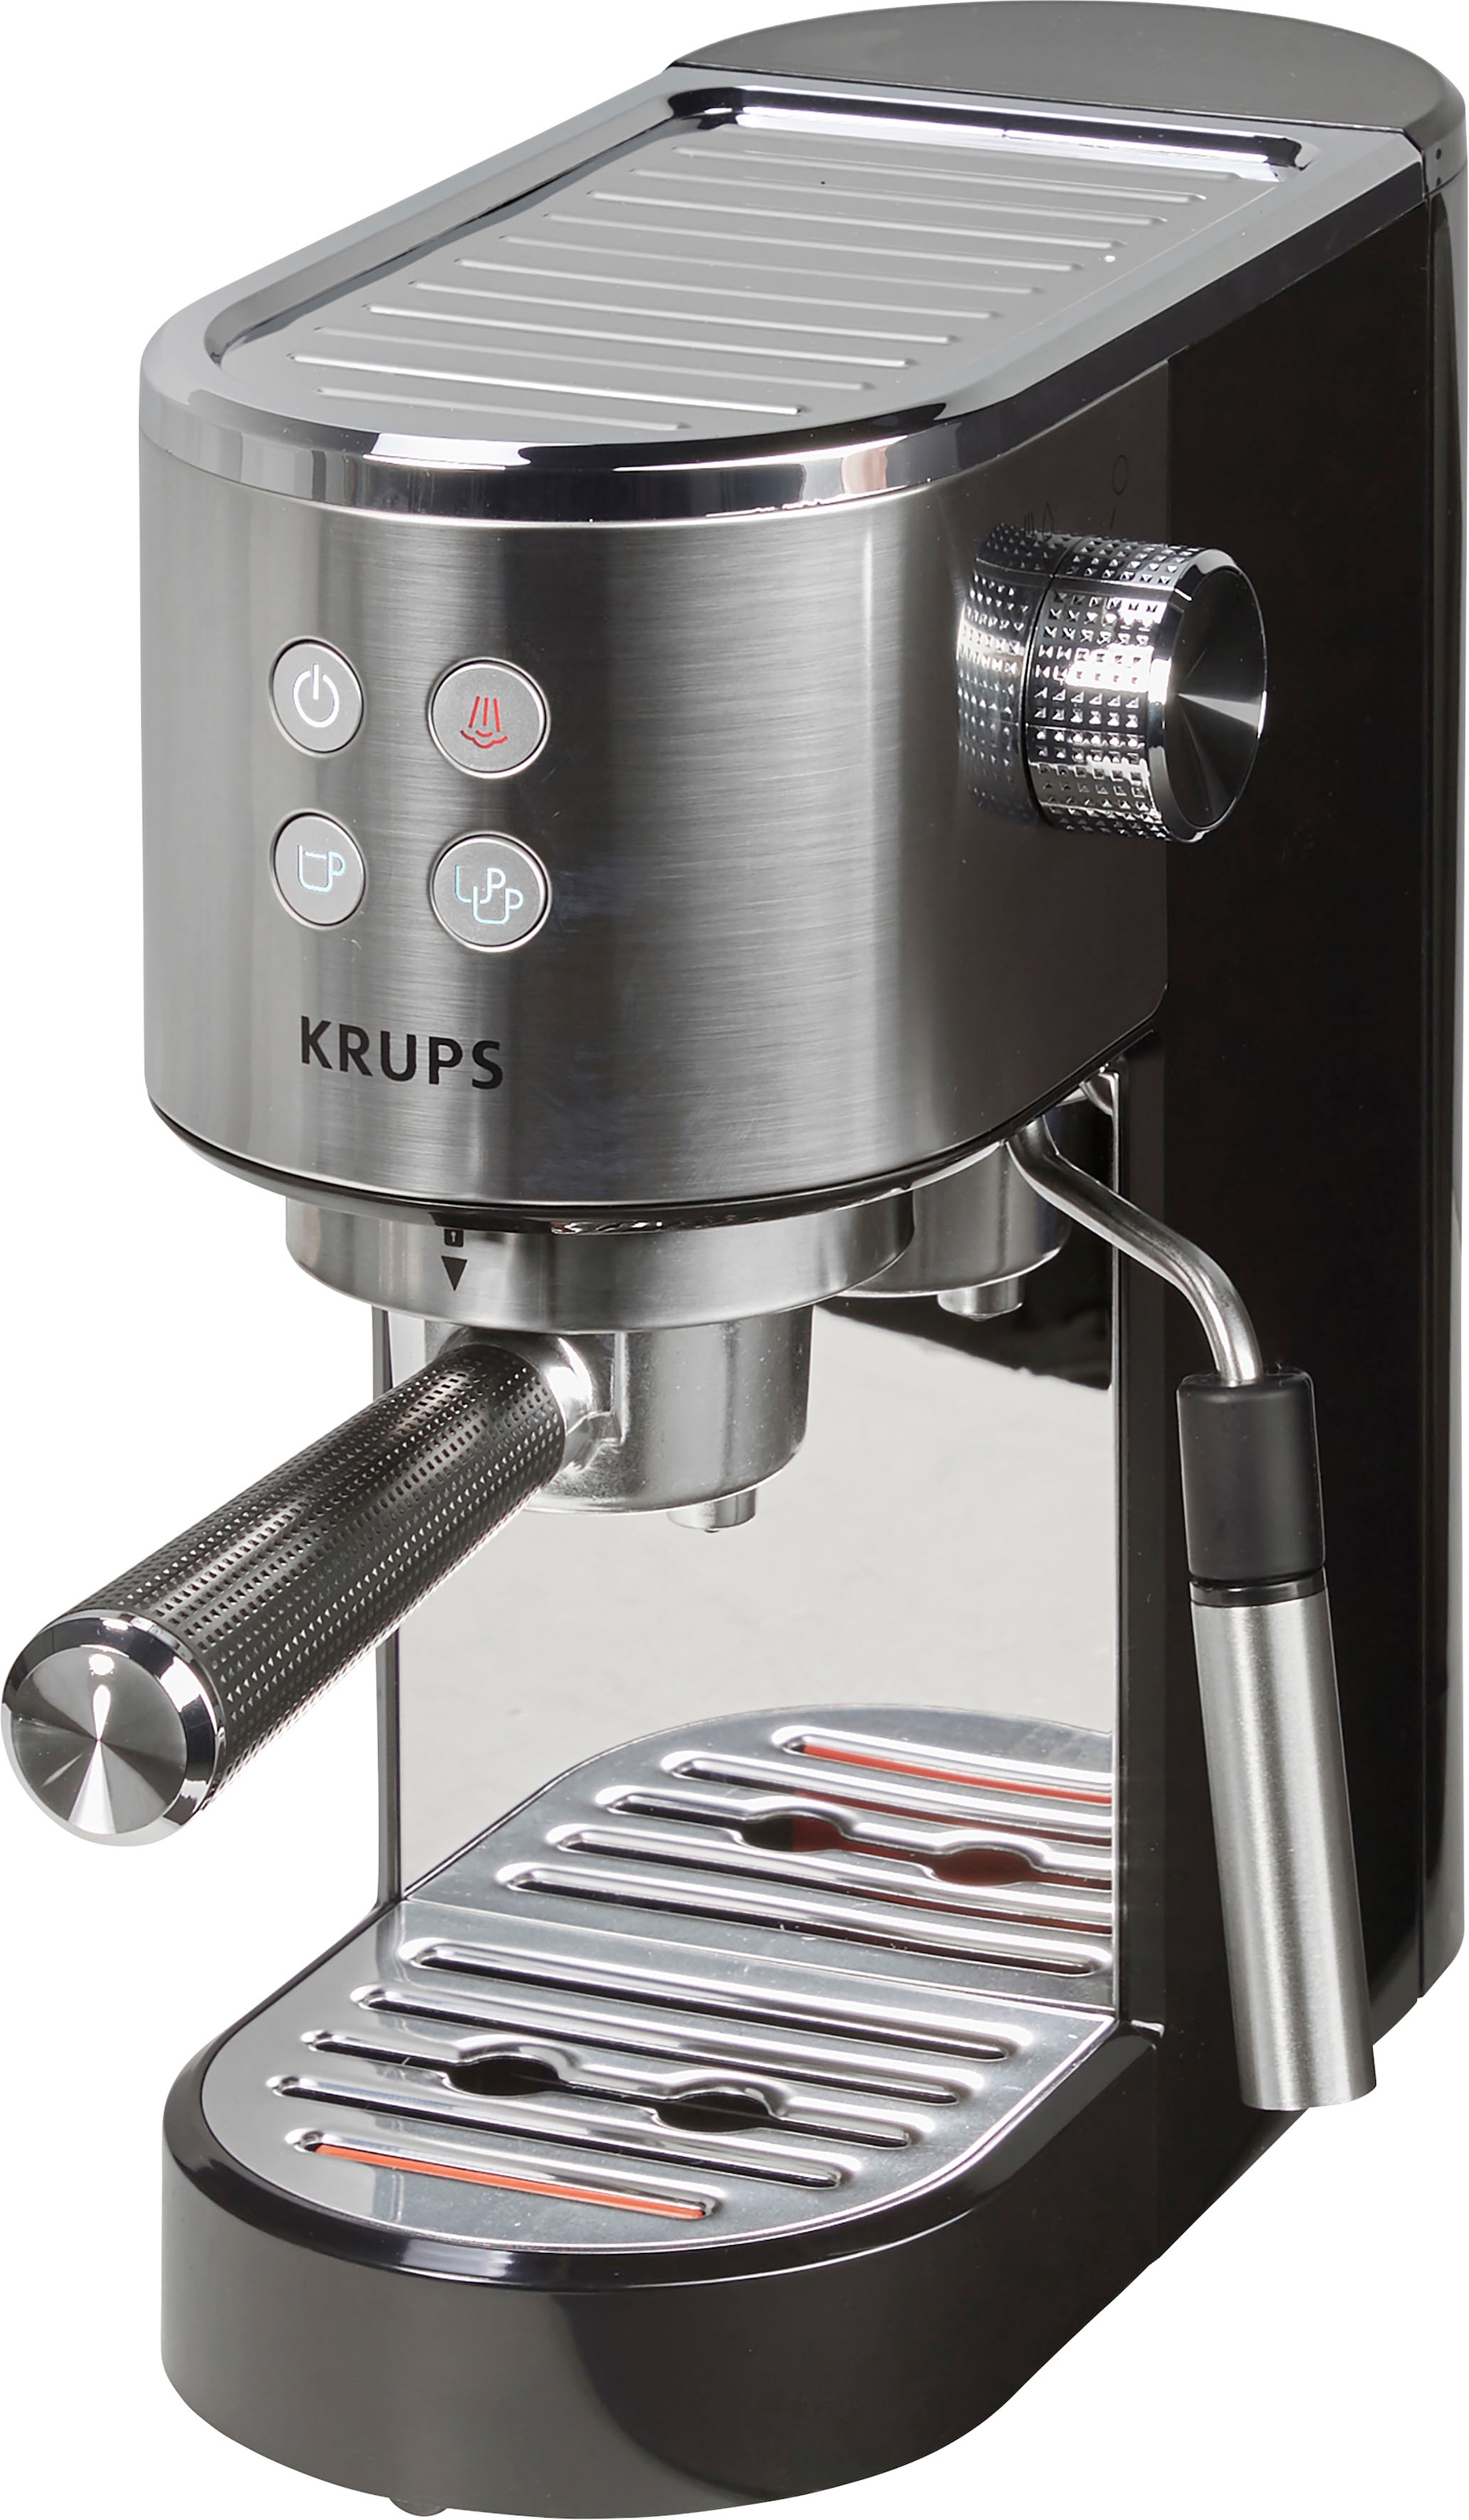 KRUPS Espressomaschine Virtuoso XP442C kaufen